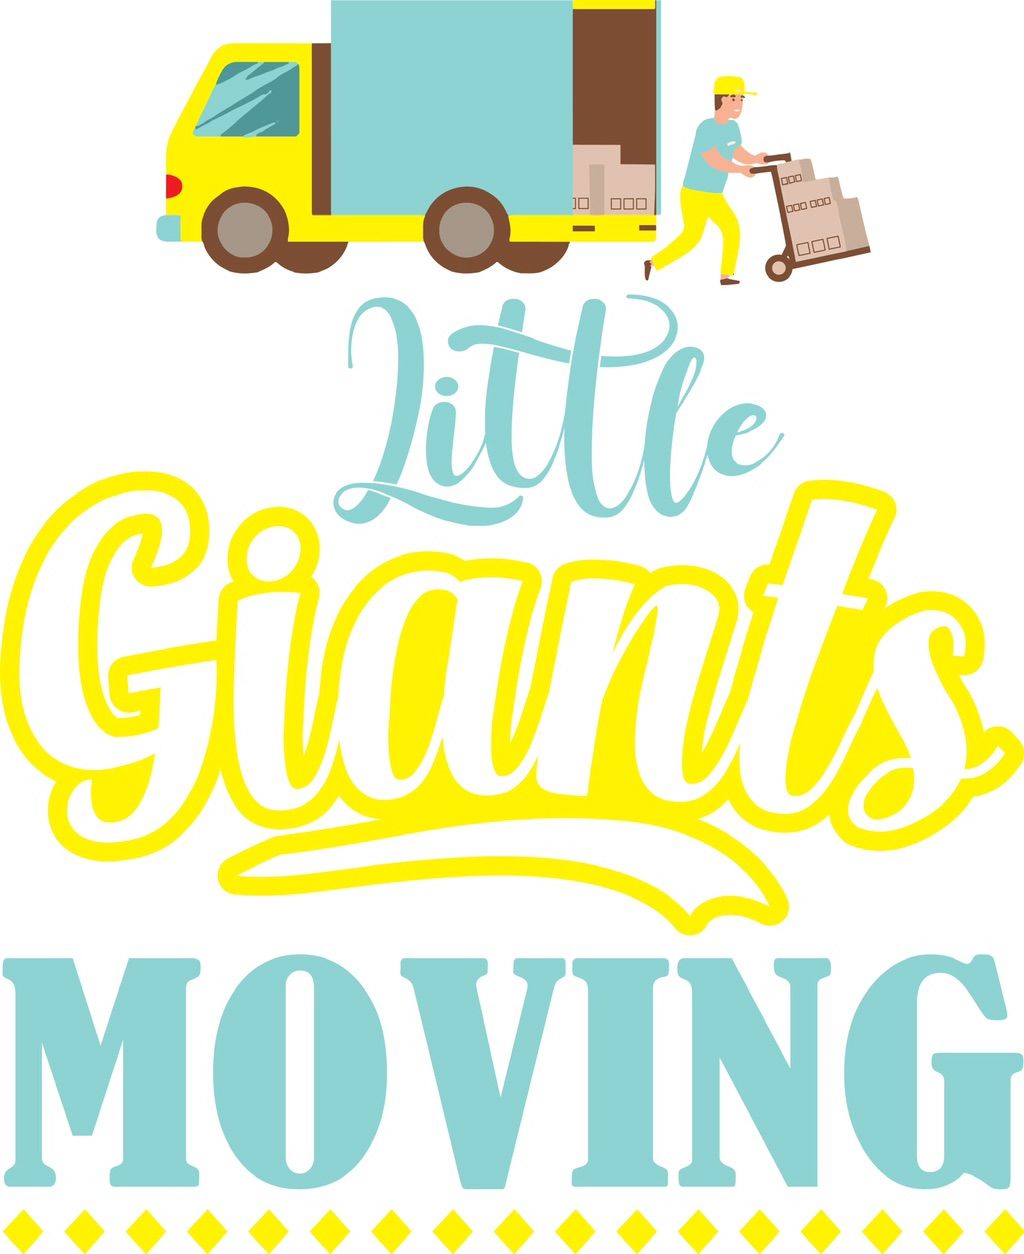 Little giants moving